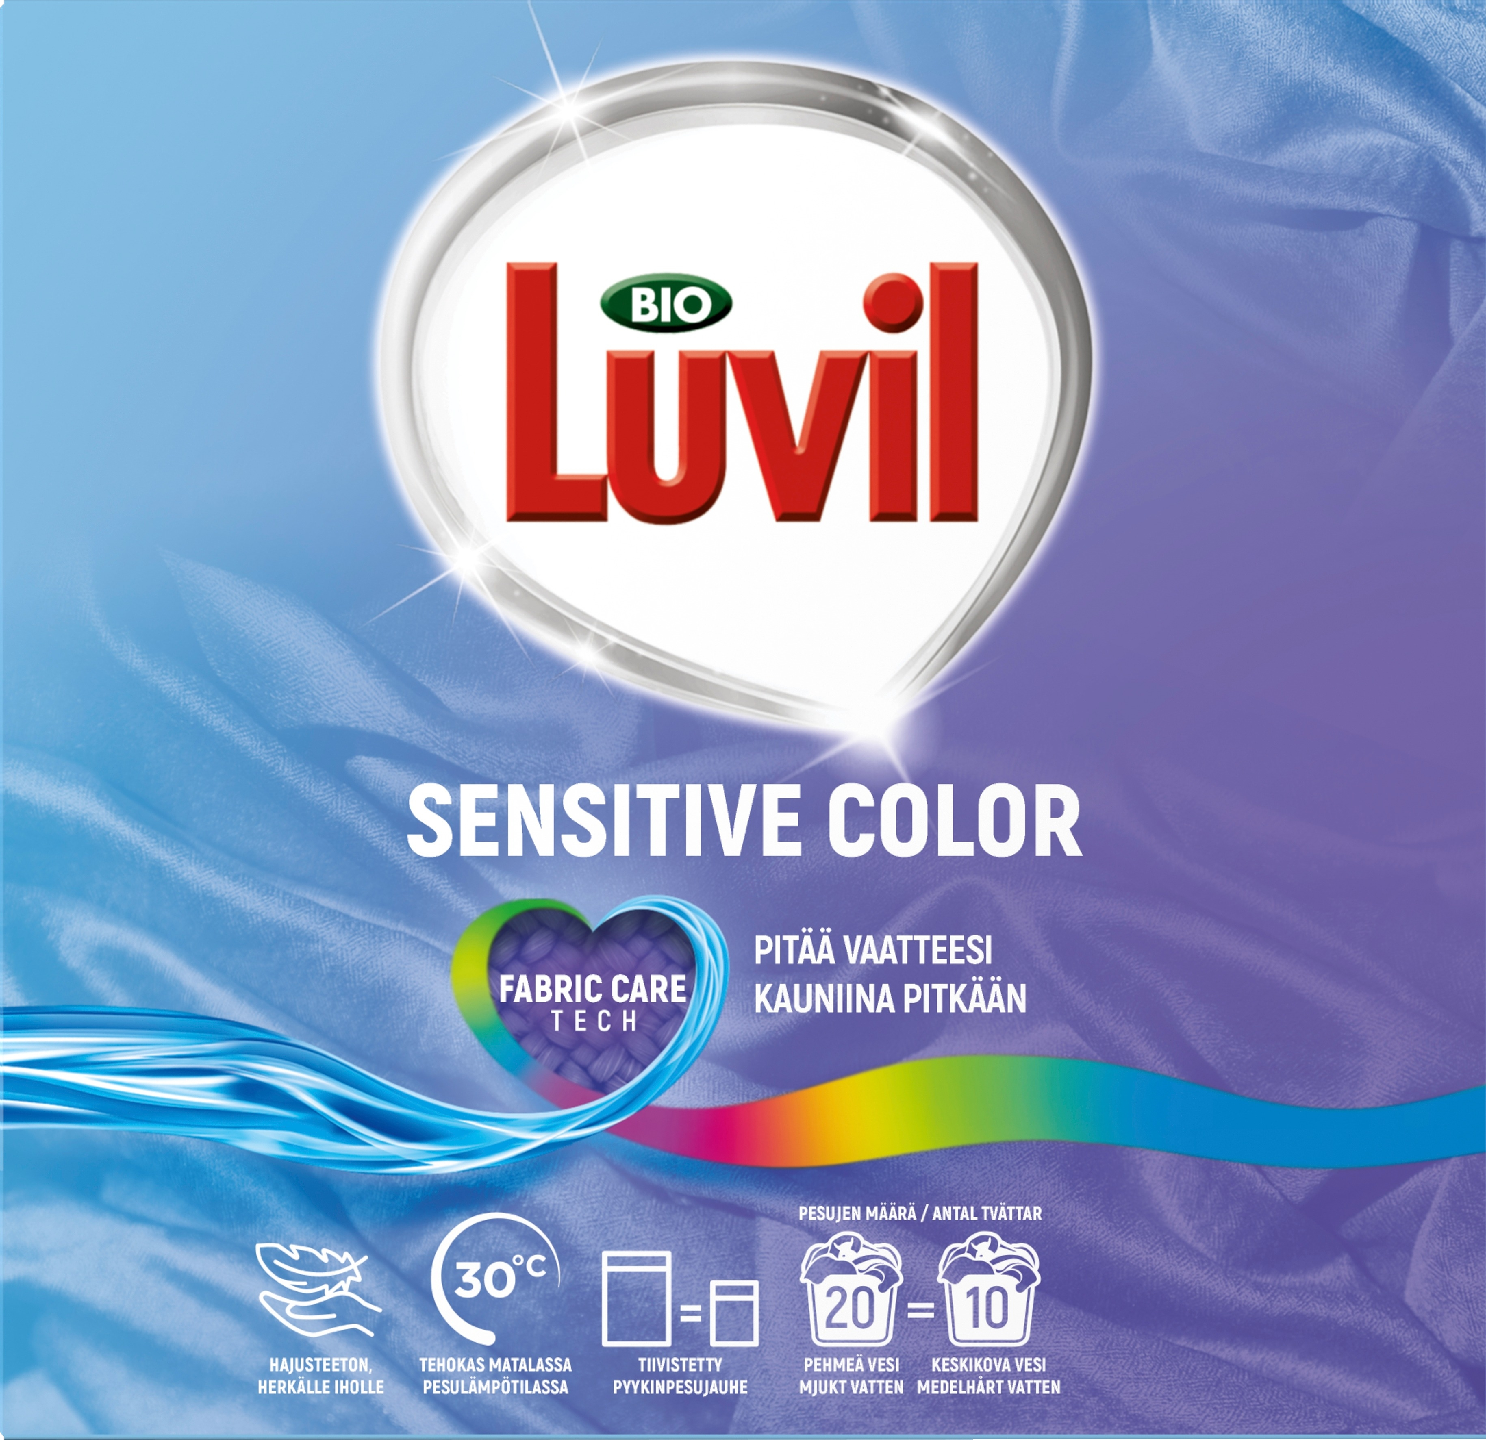 Bio Luvil pyykinpesujauhe 750g Sensitive Color